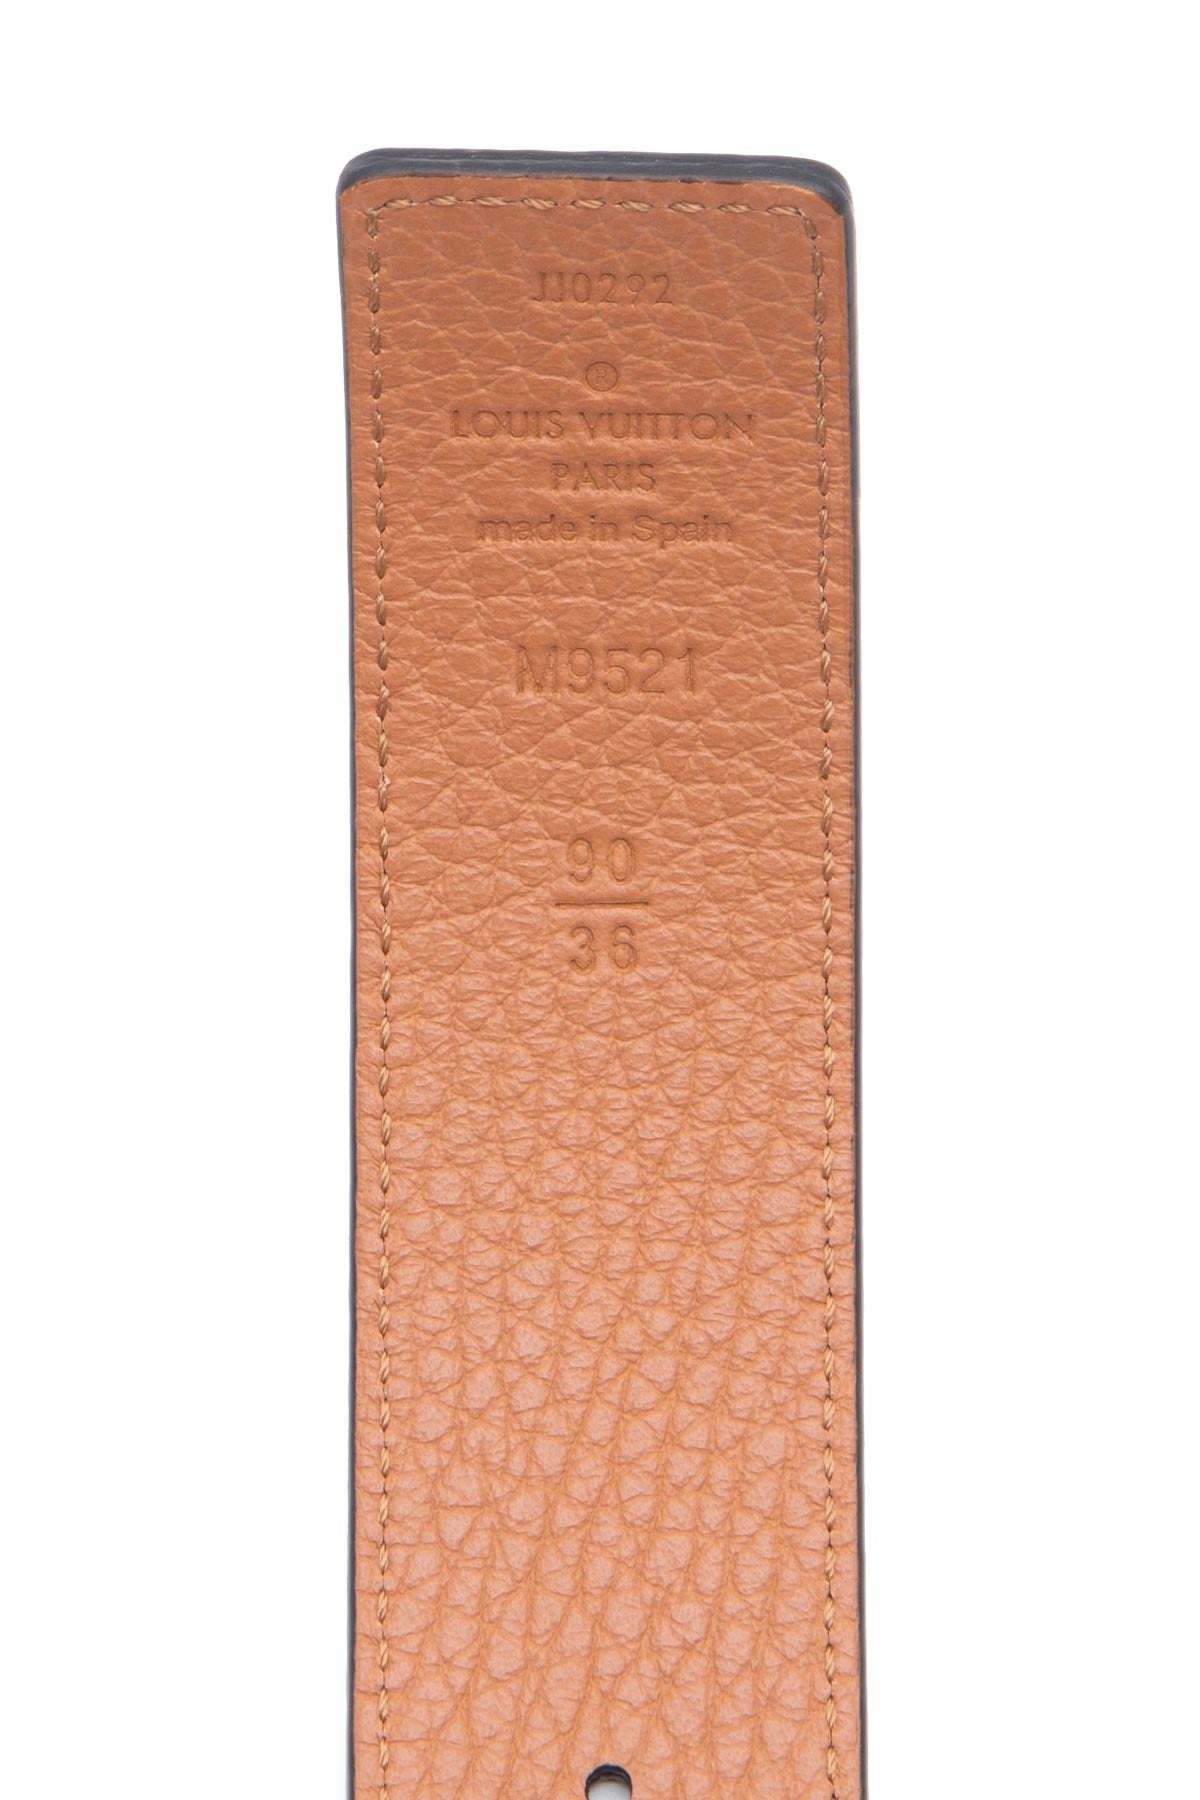 Louis Vuitton Initiales Calfskin Reversible 30mm Logo Black Brown Belt 85 34